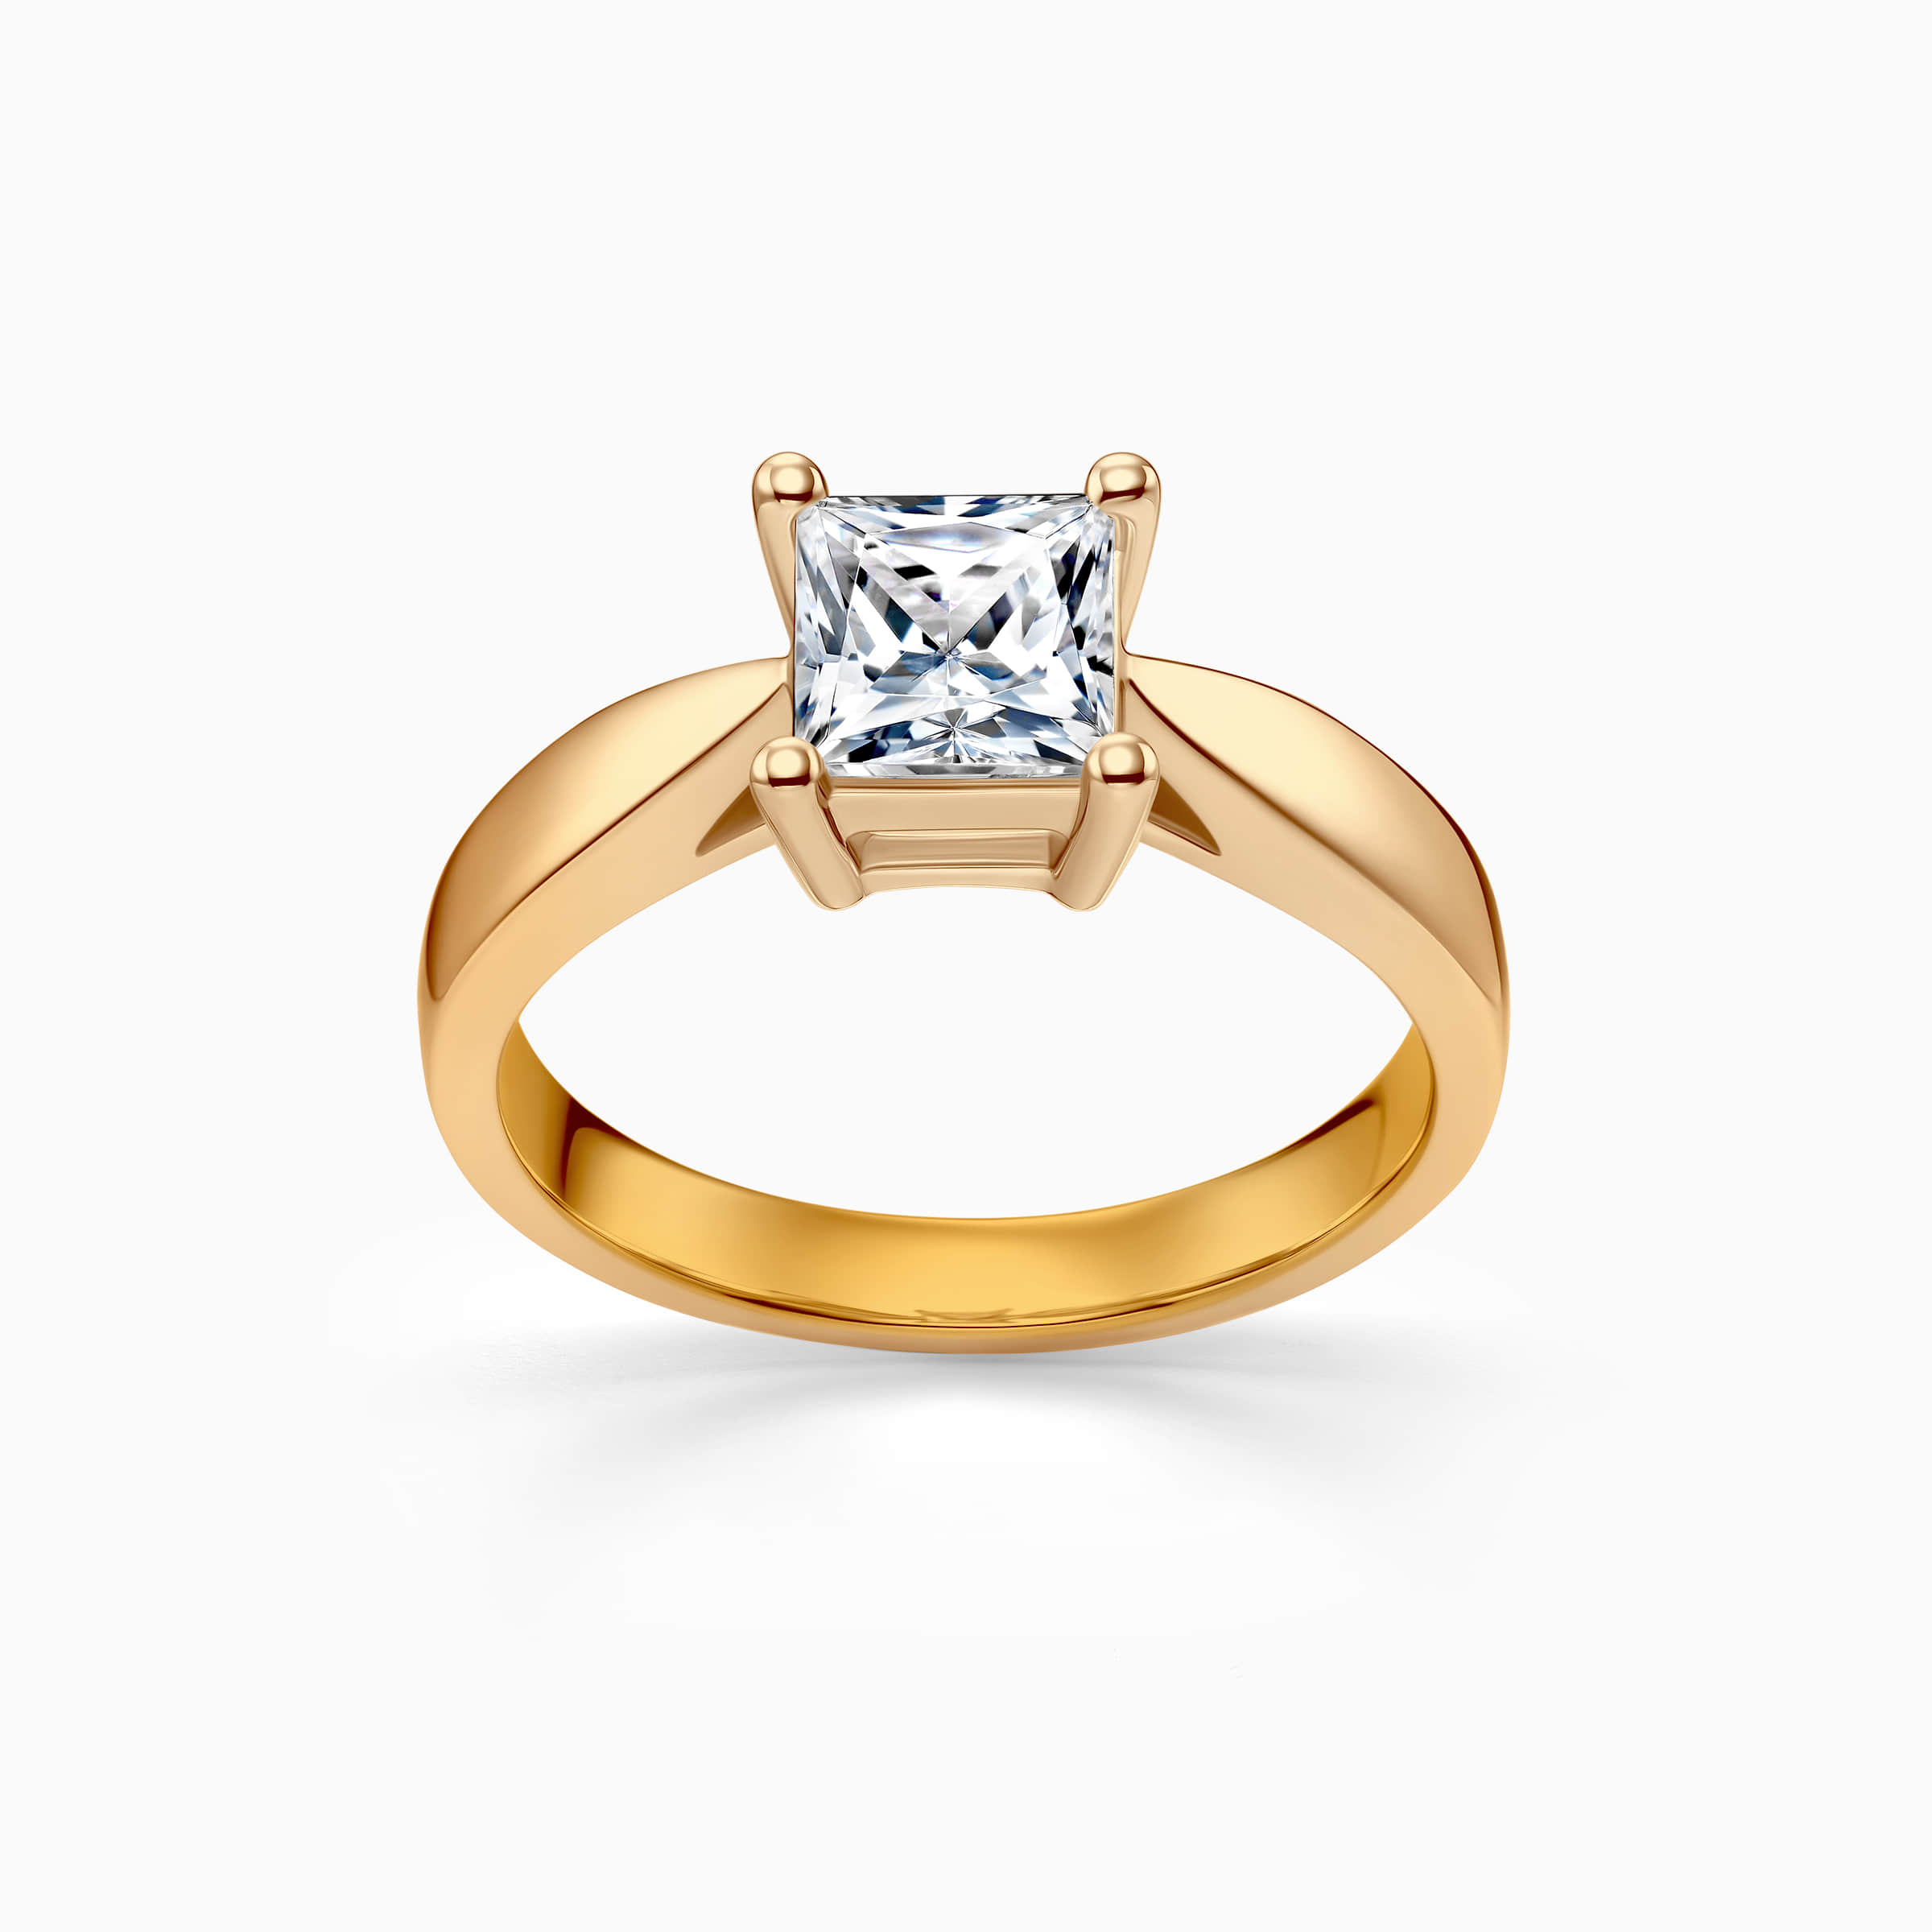 darry ring princess cut diamond engagement ring yellow gold